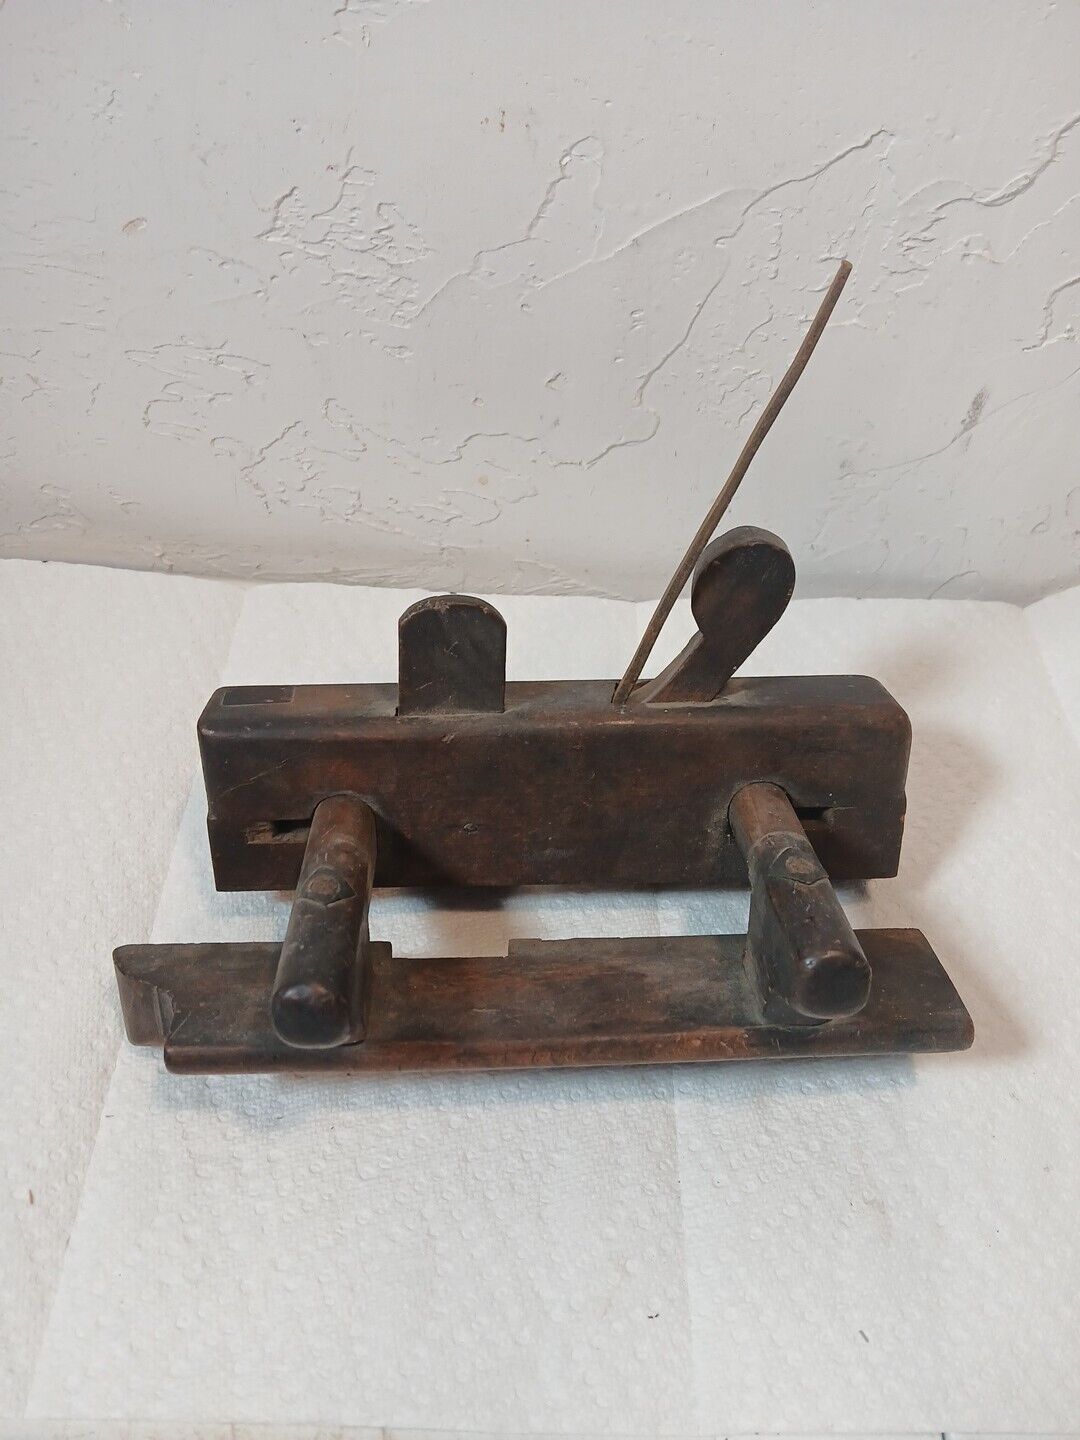 Antique Wooden Sash Fillester Plough Plane Vintage Woodworking Tool 19th C